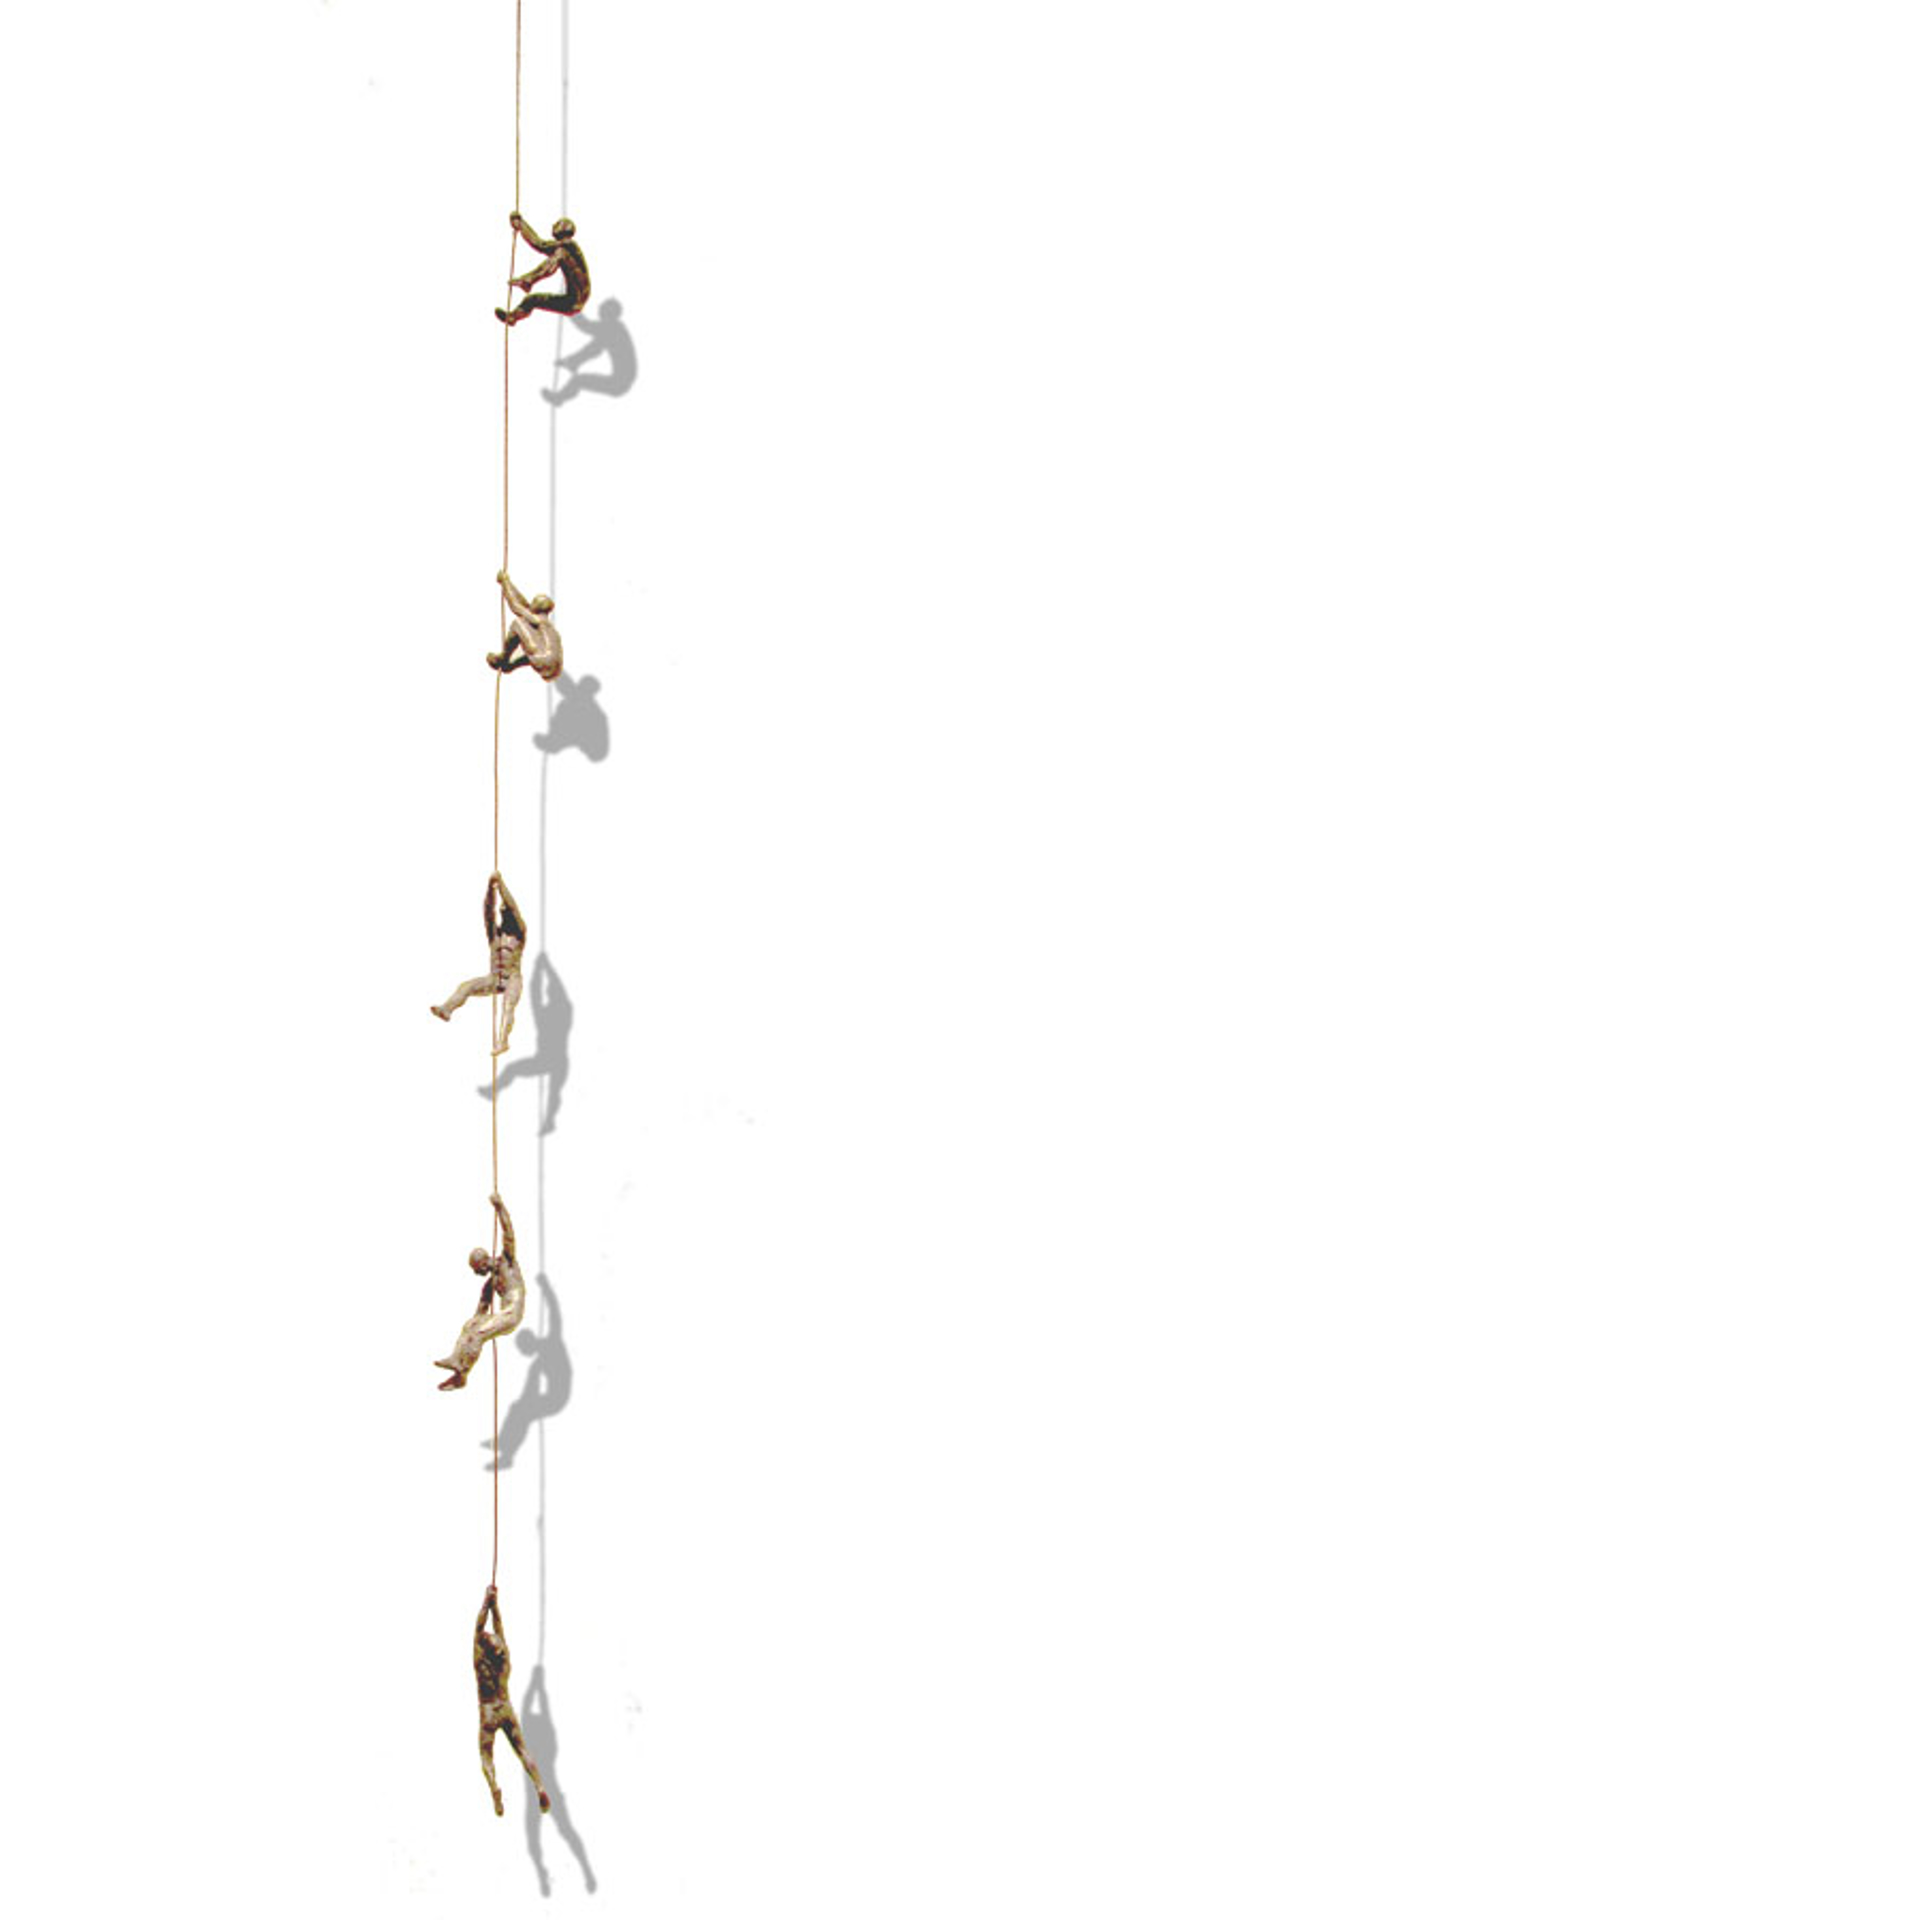 Rope Climbers by Bill Starke